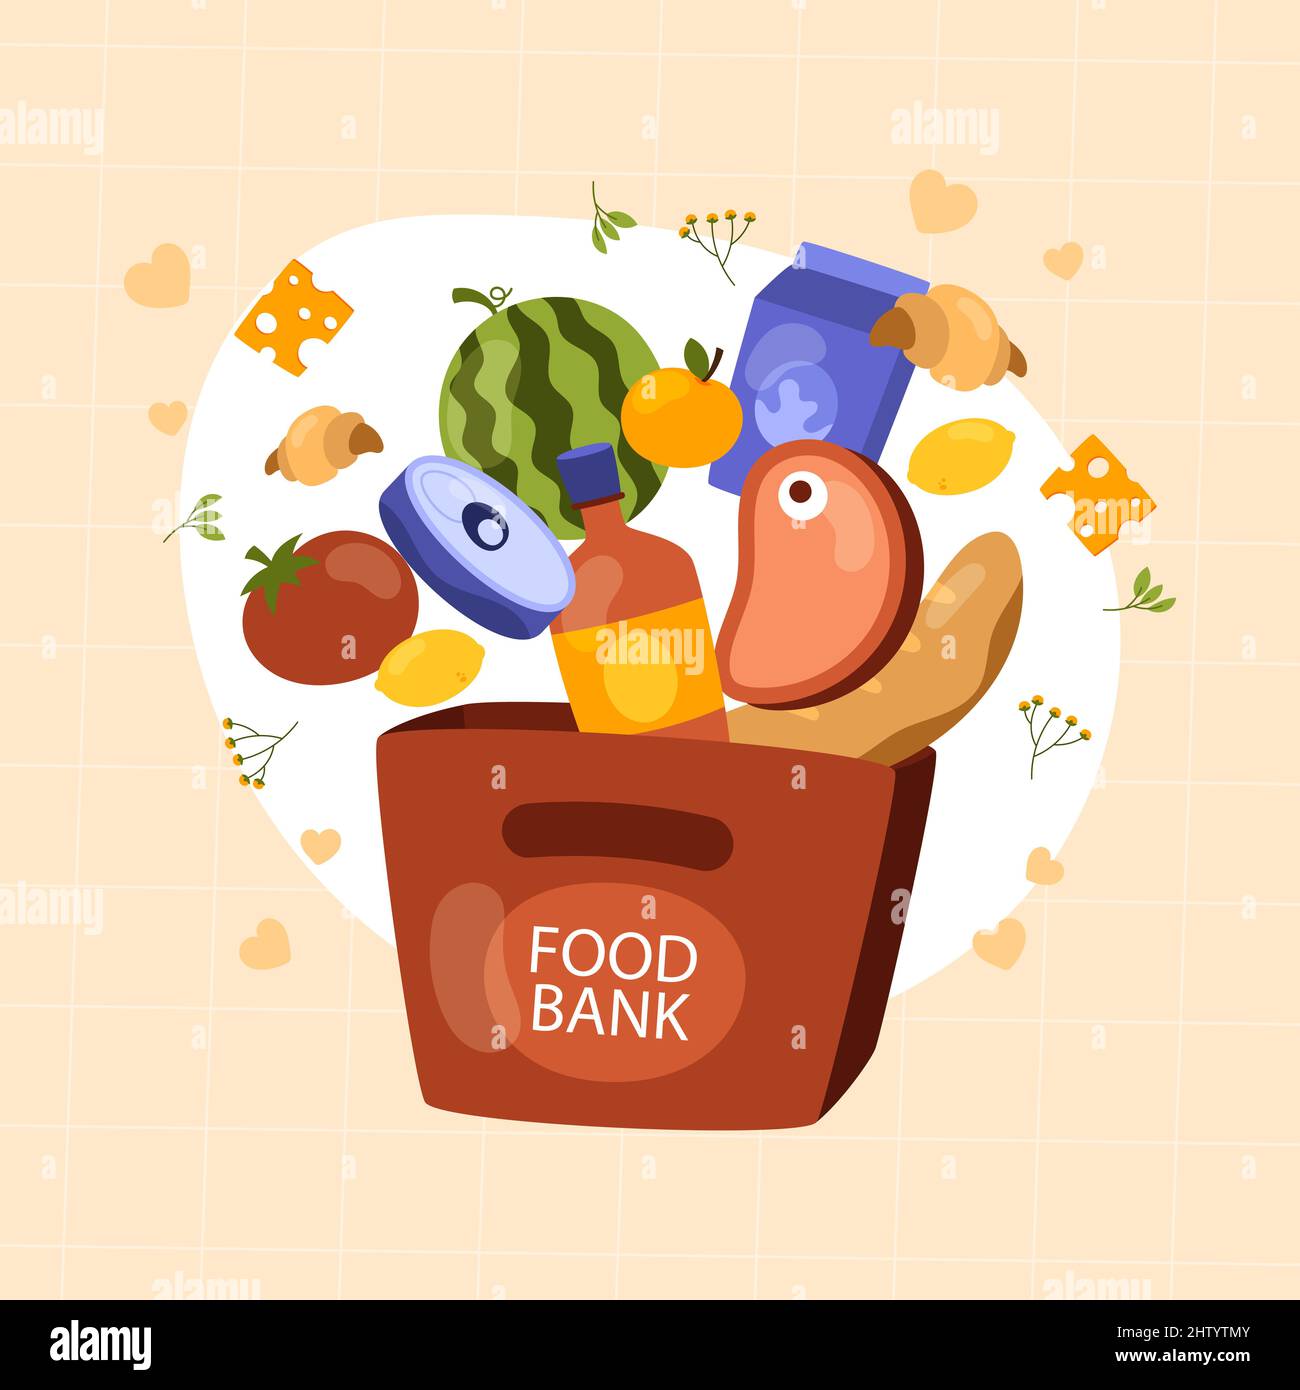 Hand drawn food bank illustration Vector illustration. Stock Vector